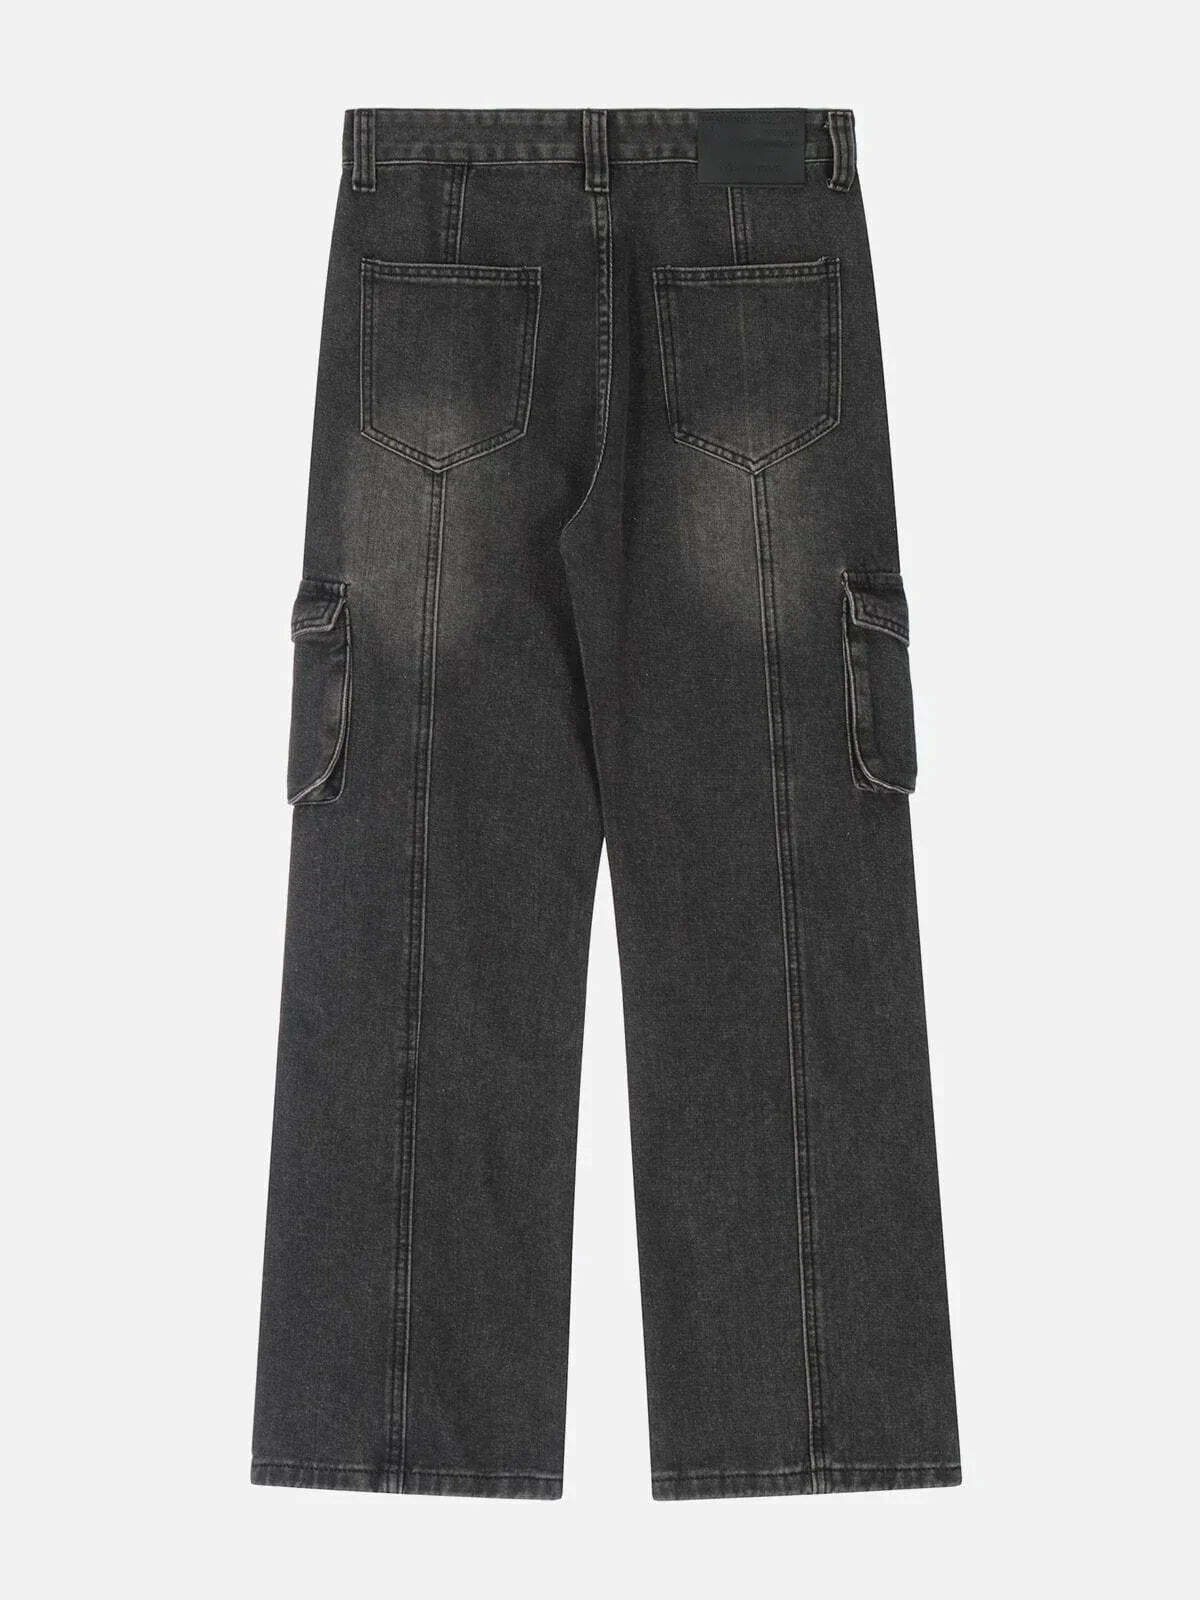 multipocket vintage jeans edgy & retro streetwear 4953